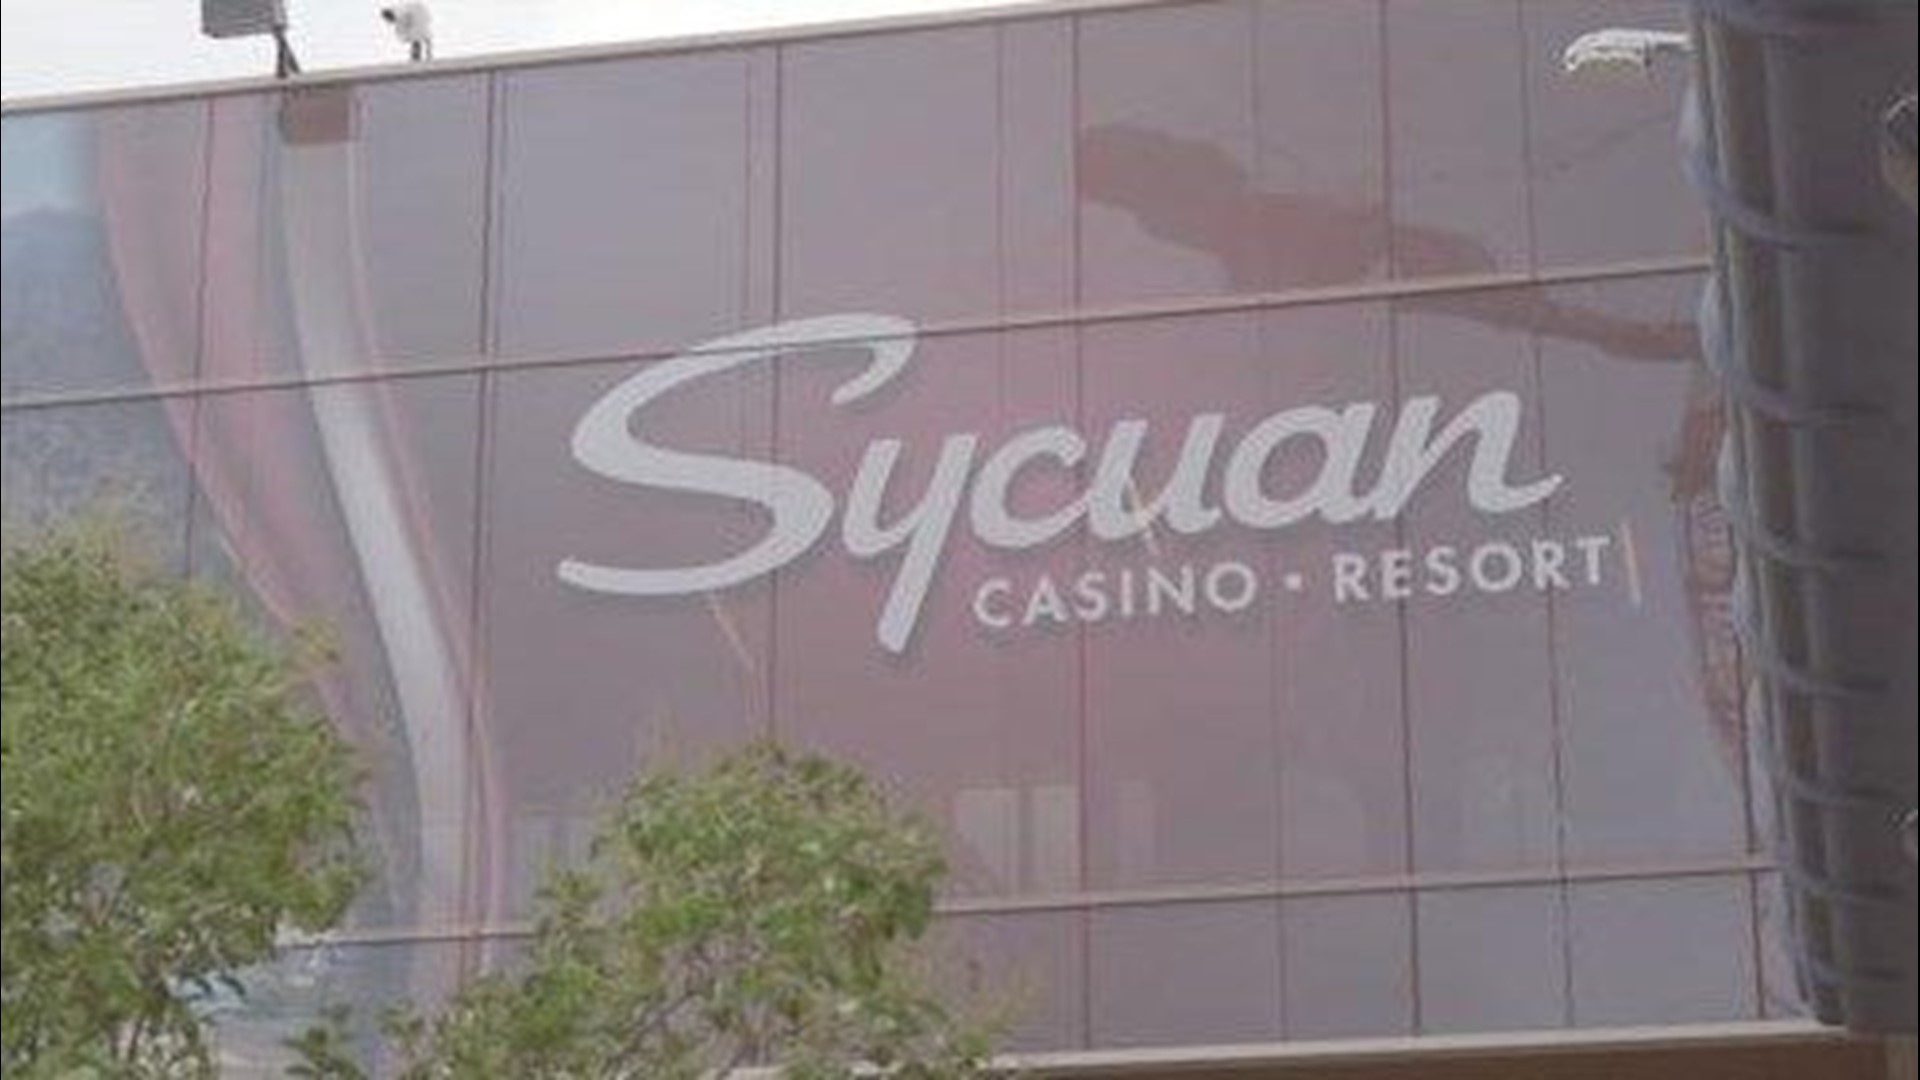 san diego sycuan casino penetration